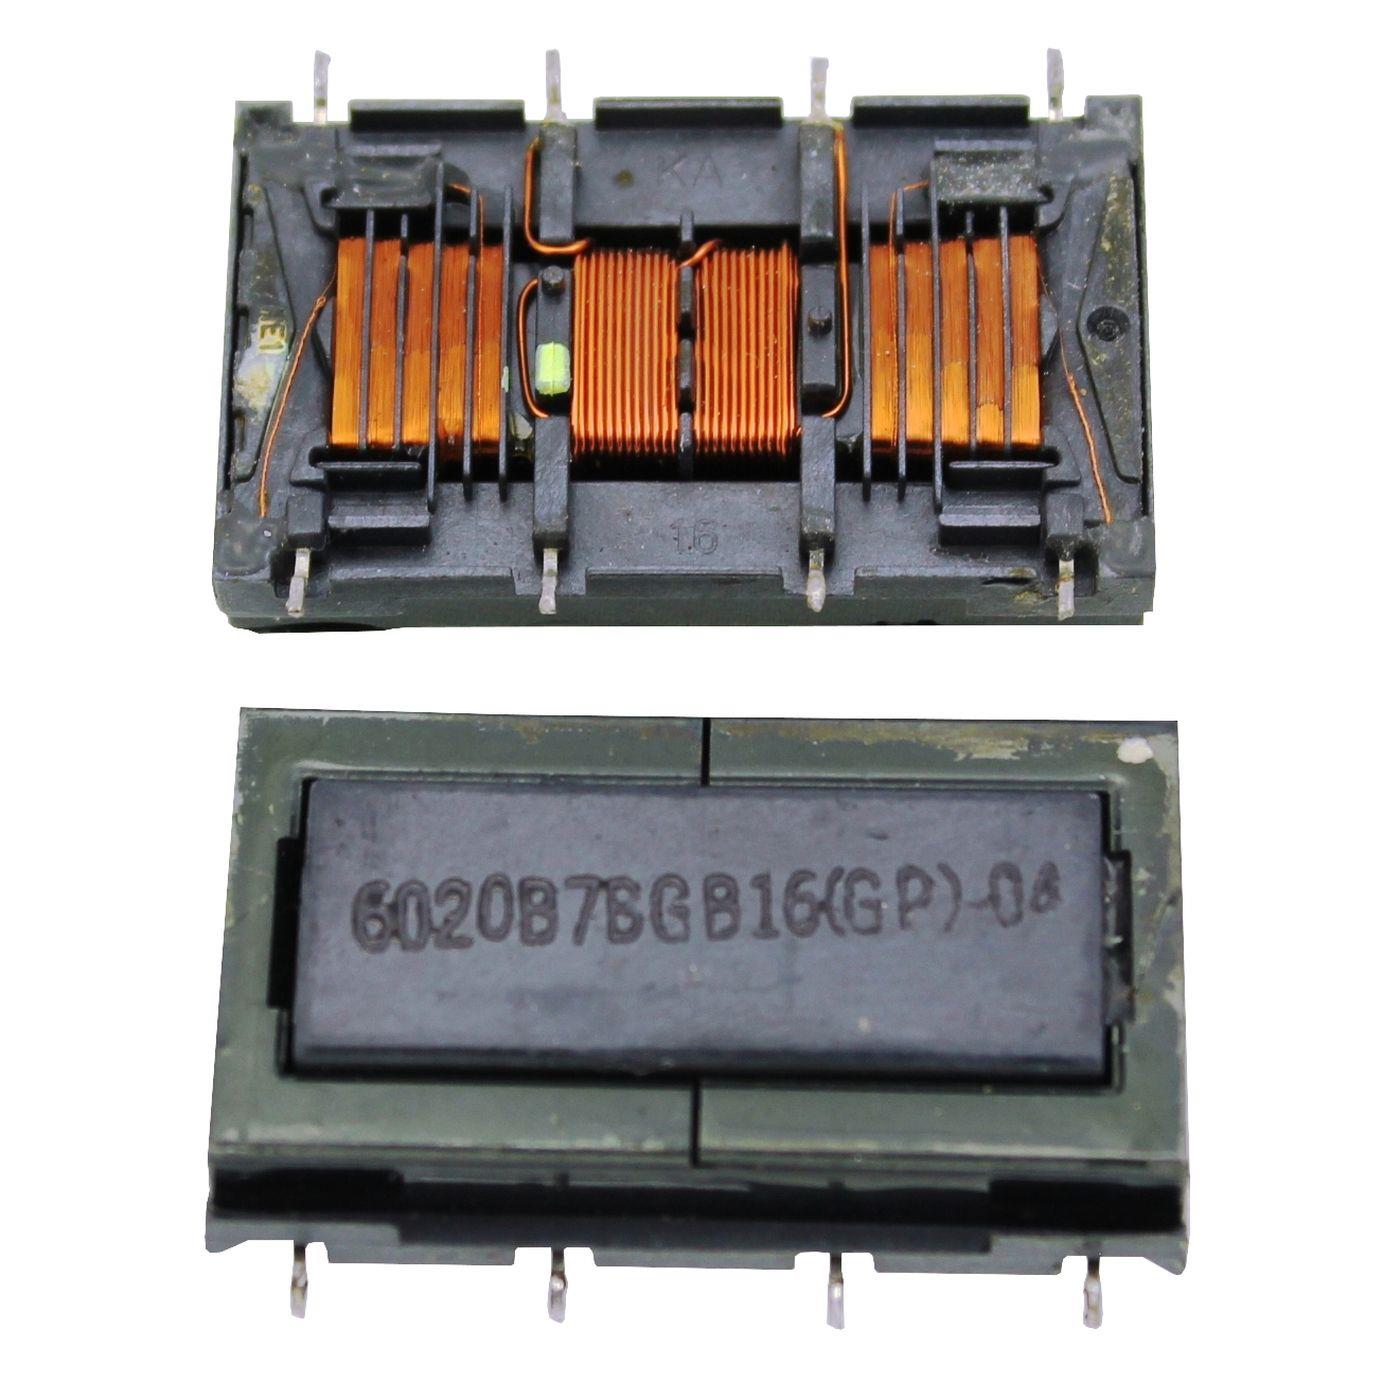 LCD Inverter Transformer Lumonic 6020B Inverter board transformer